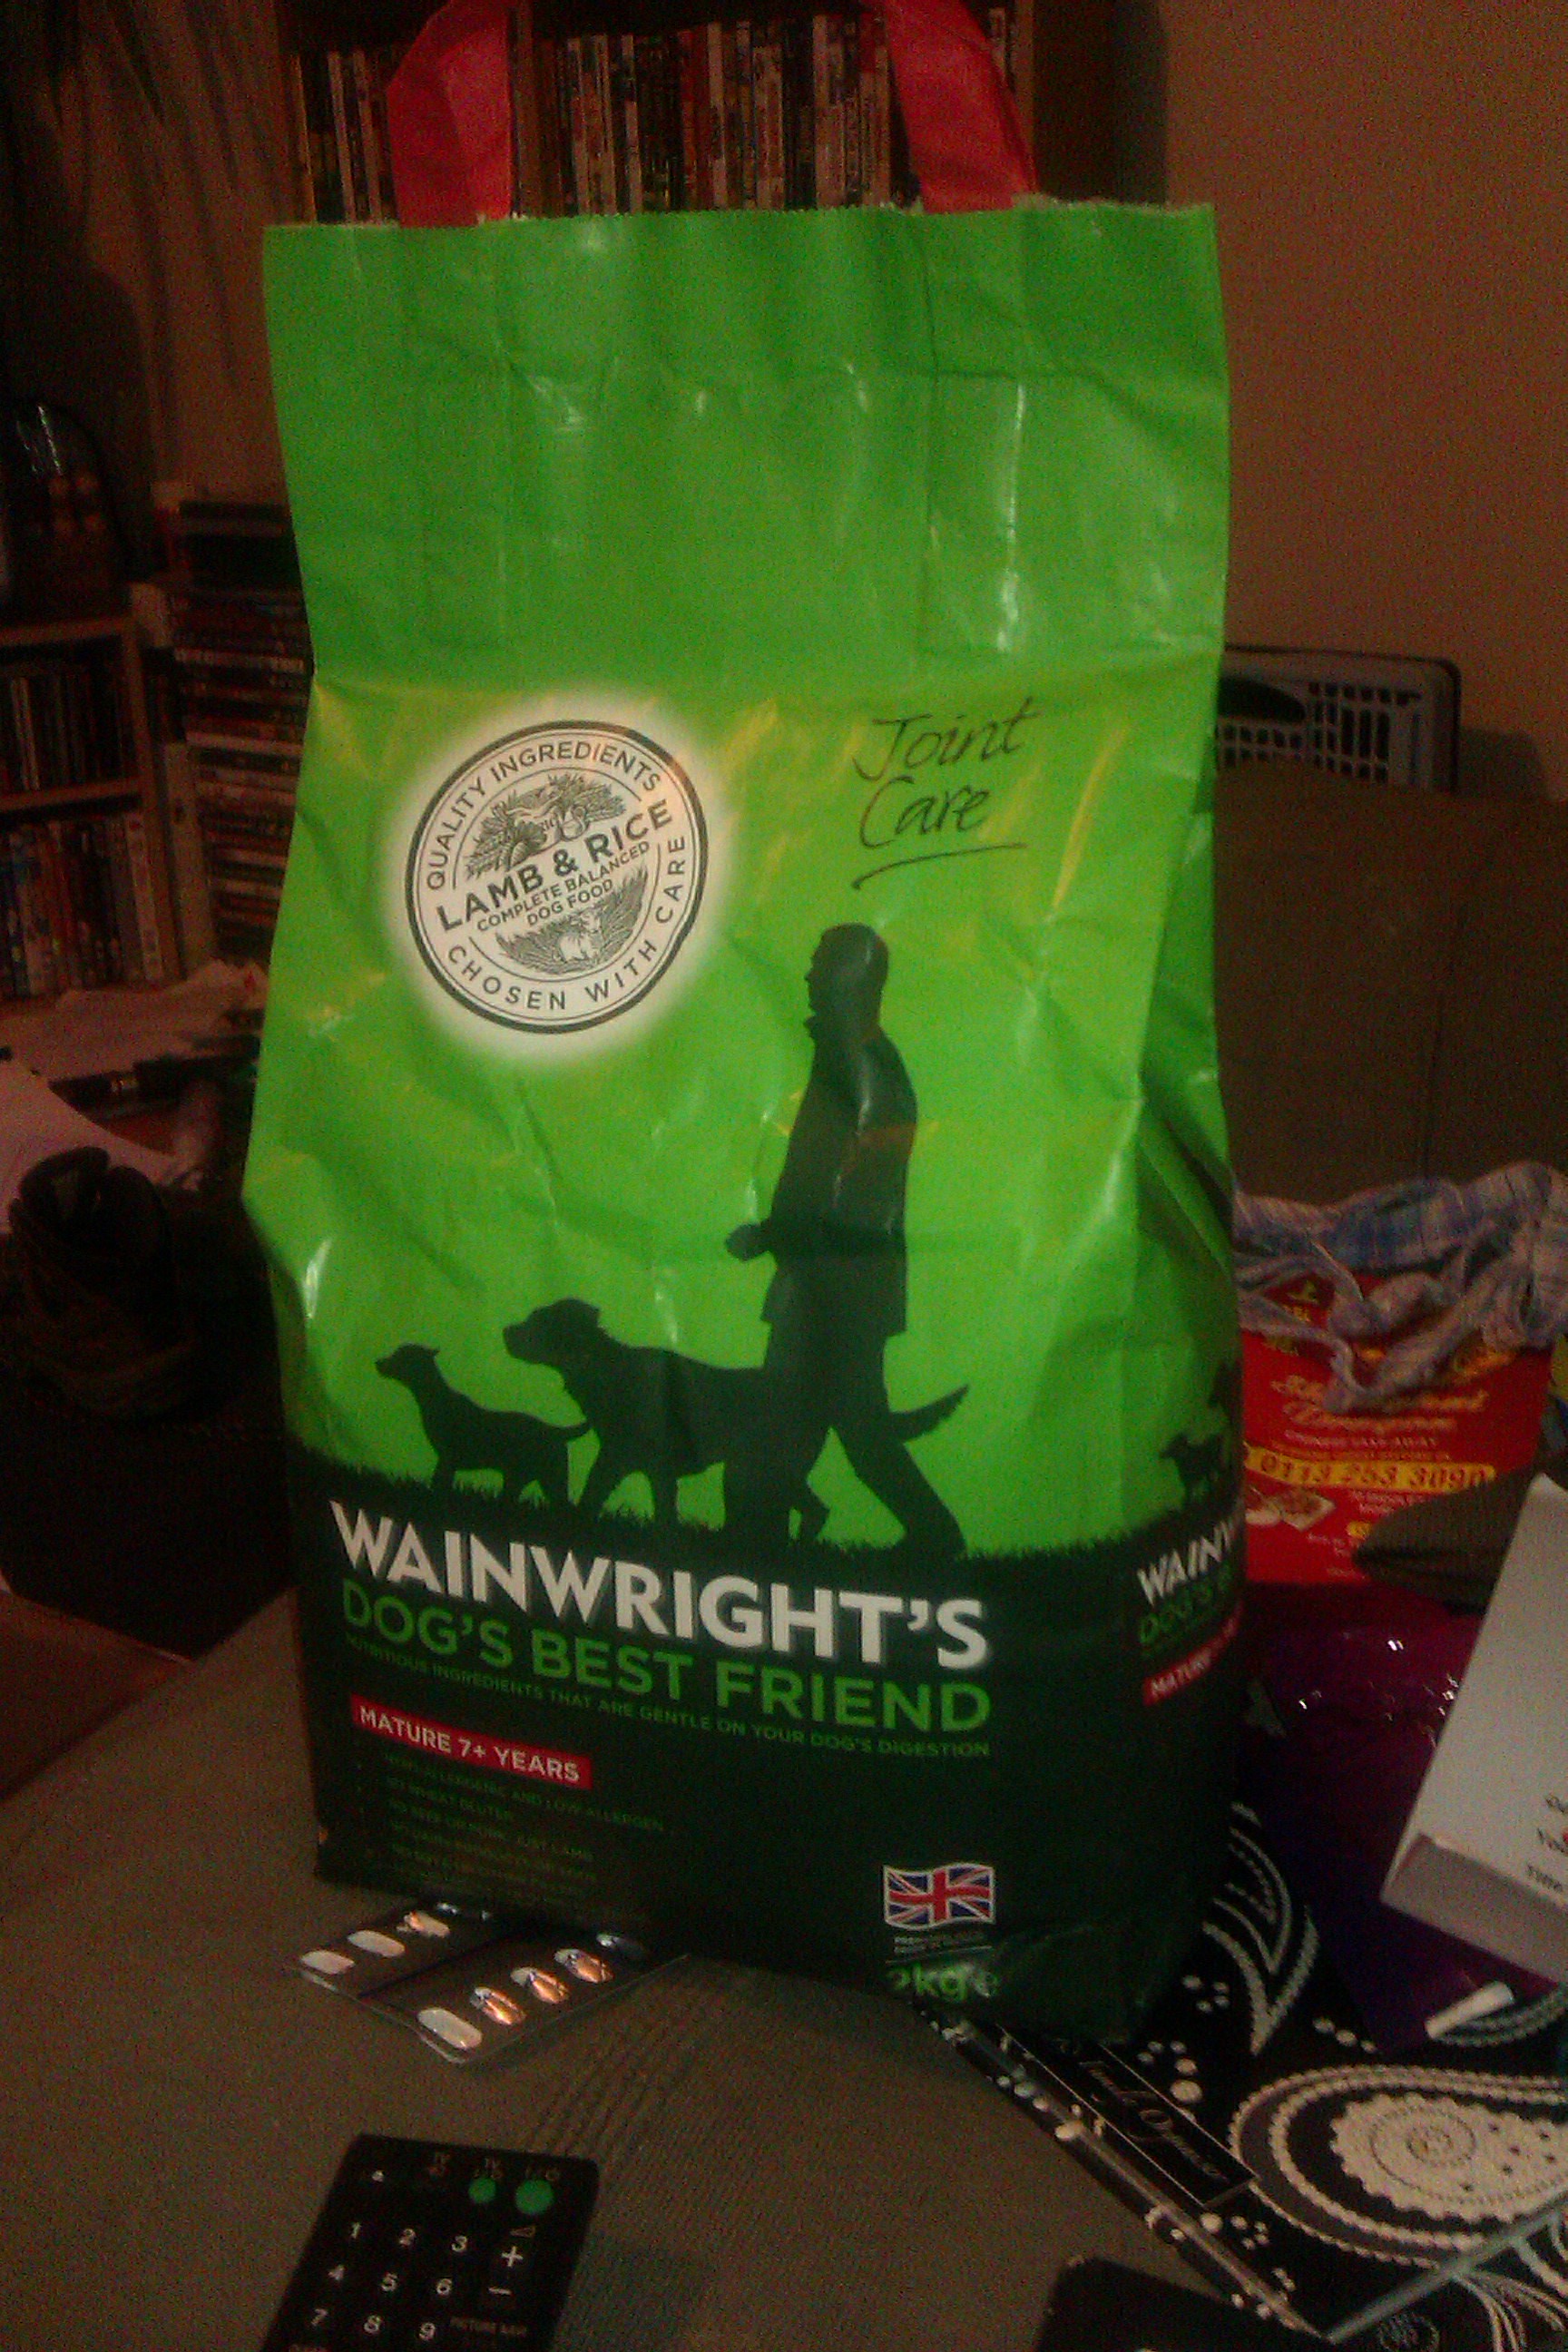 wainwrights dog food